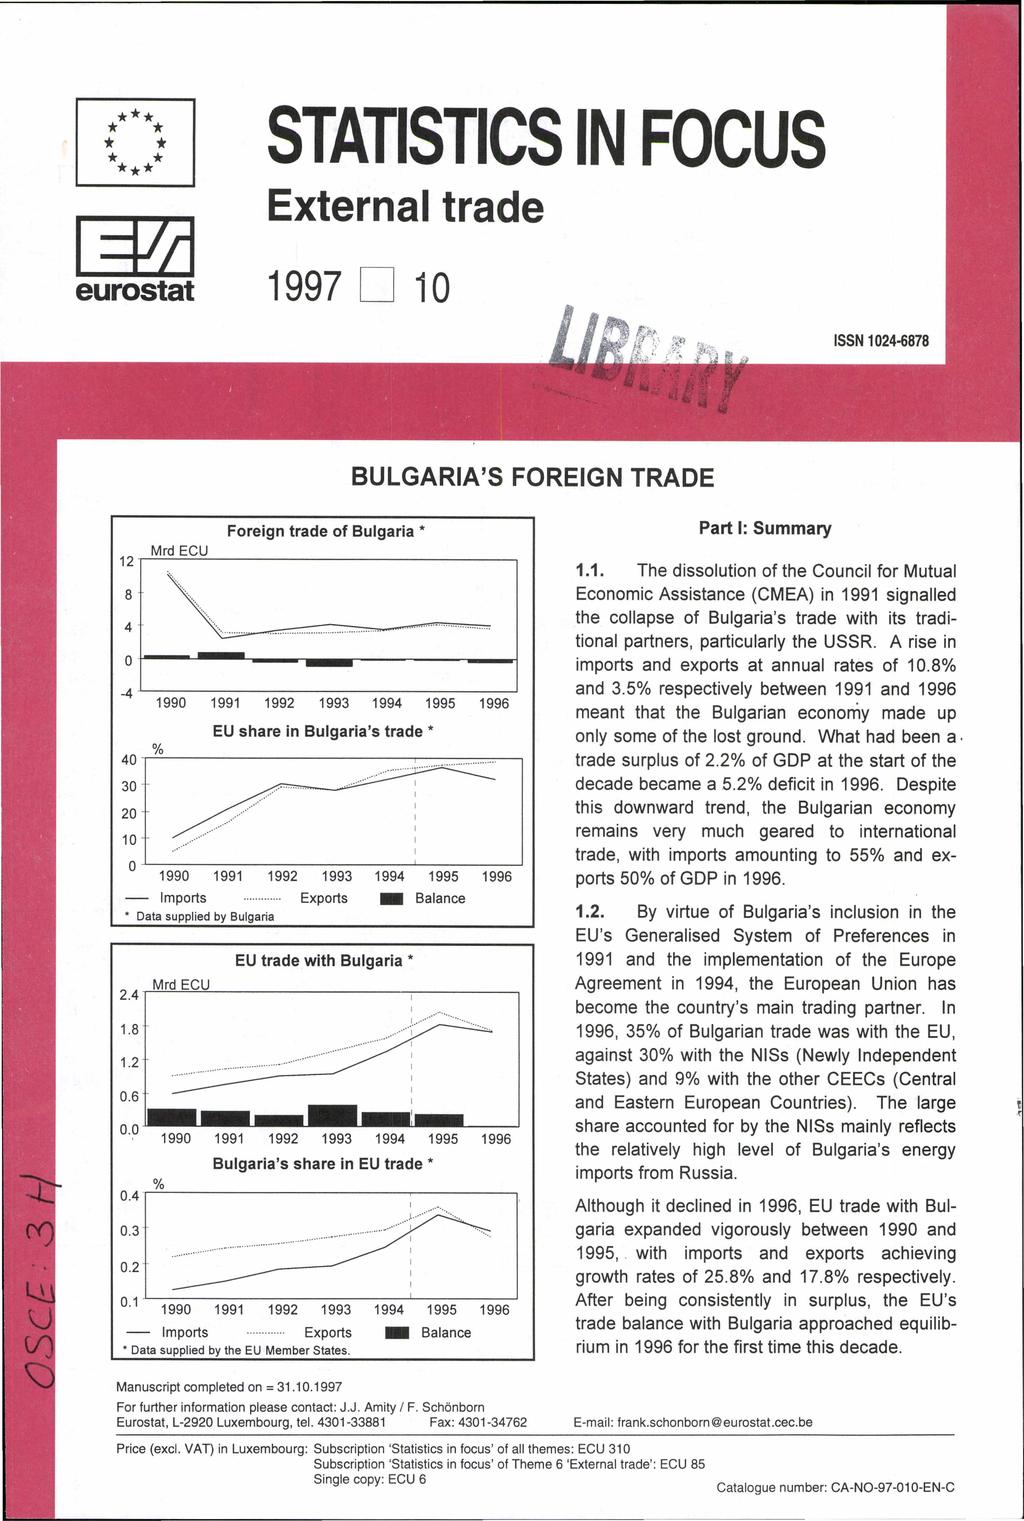 *** * * * * * * *** STATISTICS IN FOCUS External trade ~ eurostat 1997 D 10 ISSN 1024-6878 BULGARIA'S FOREIGN TRADE 12 8 4 0-4 Foreign trade of Bulgaria * 1990 1991 1992 1993 1994 1995 1996 EU share